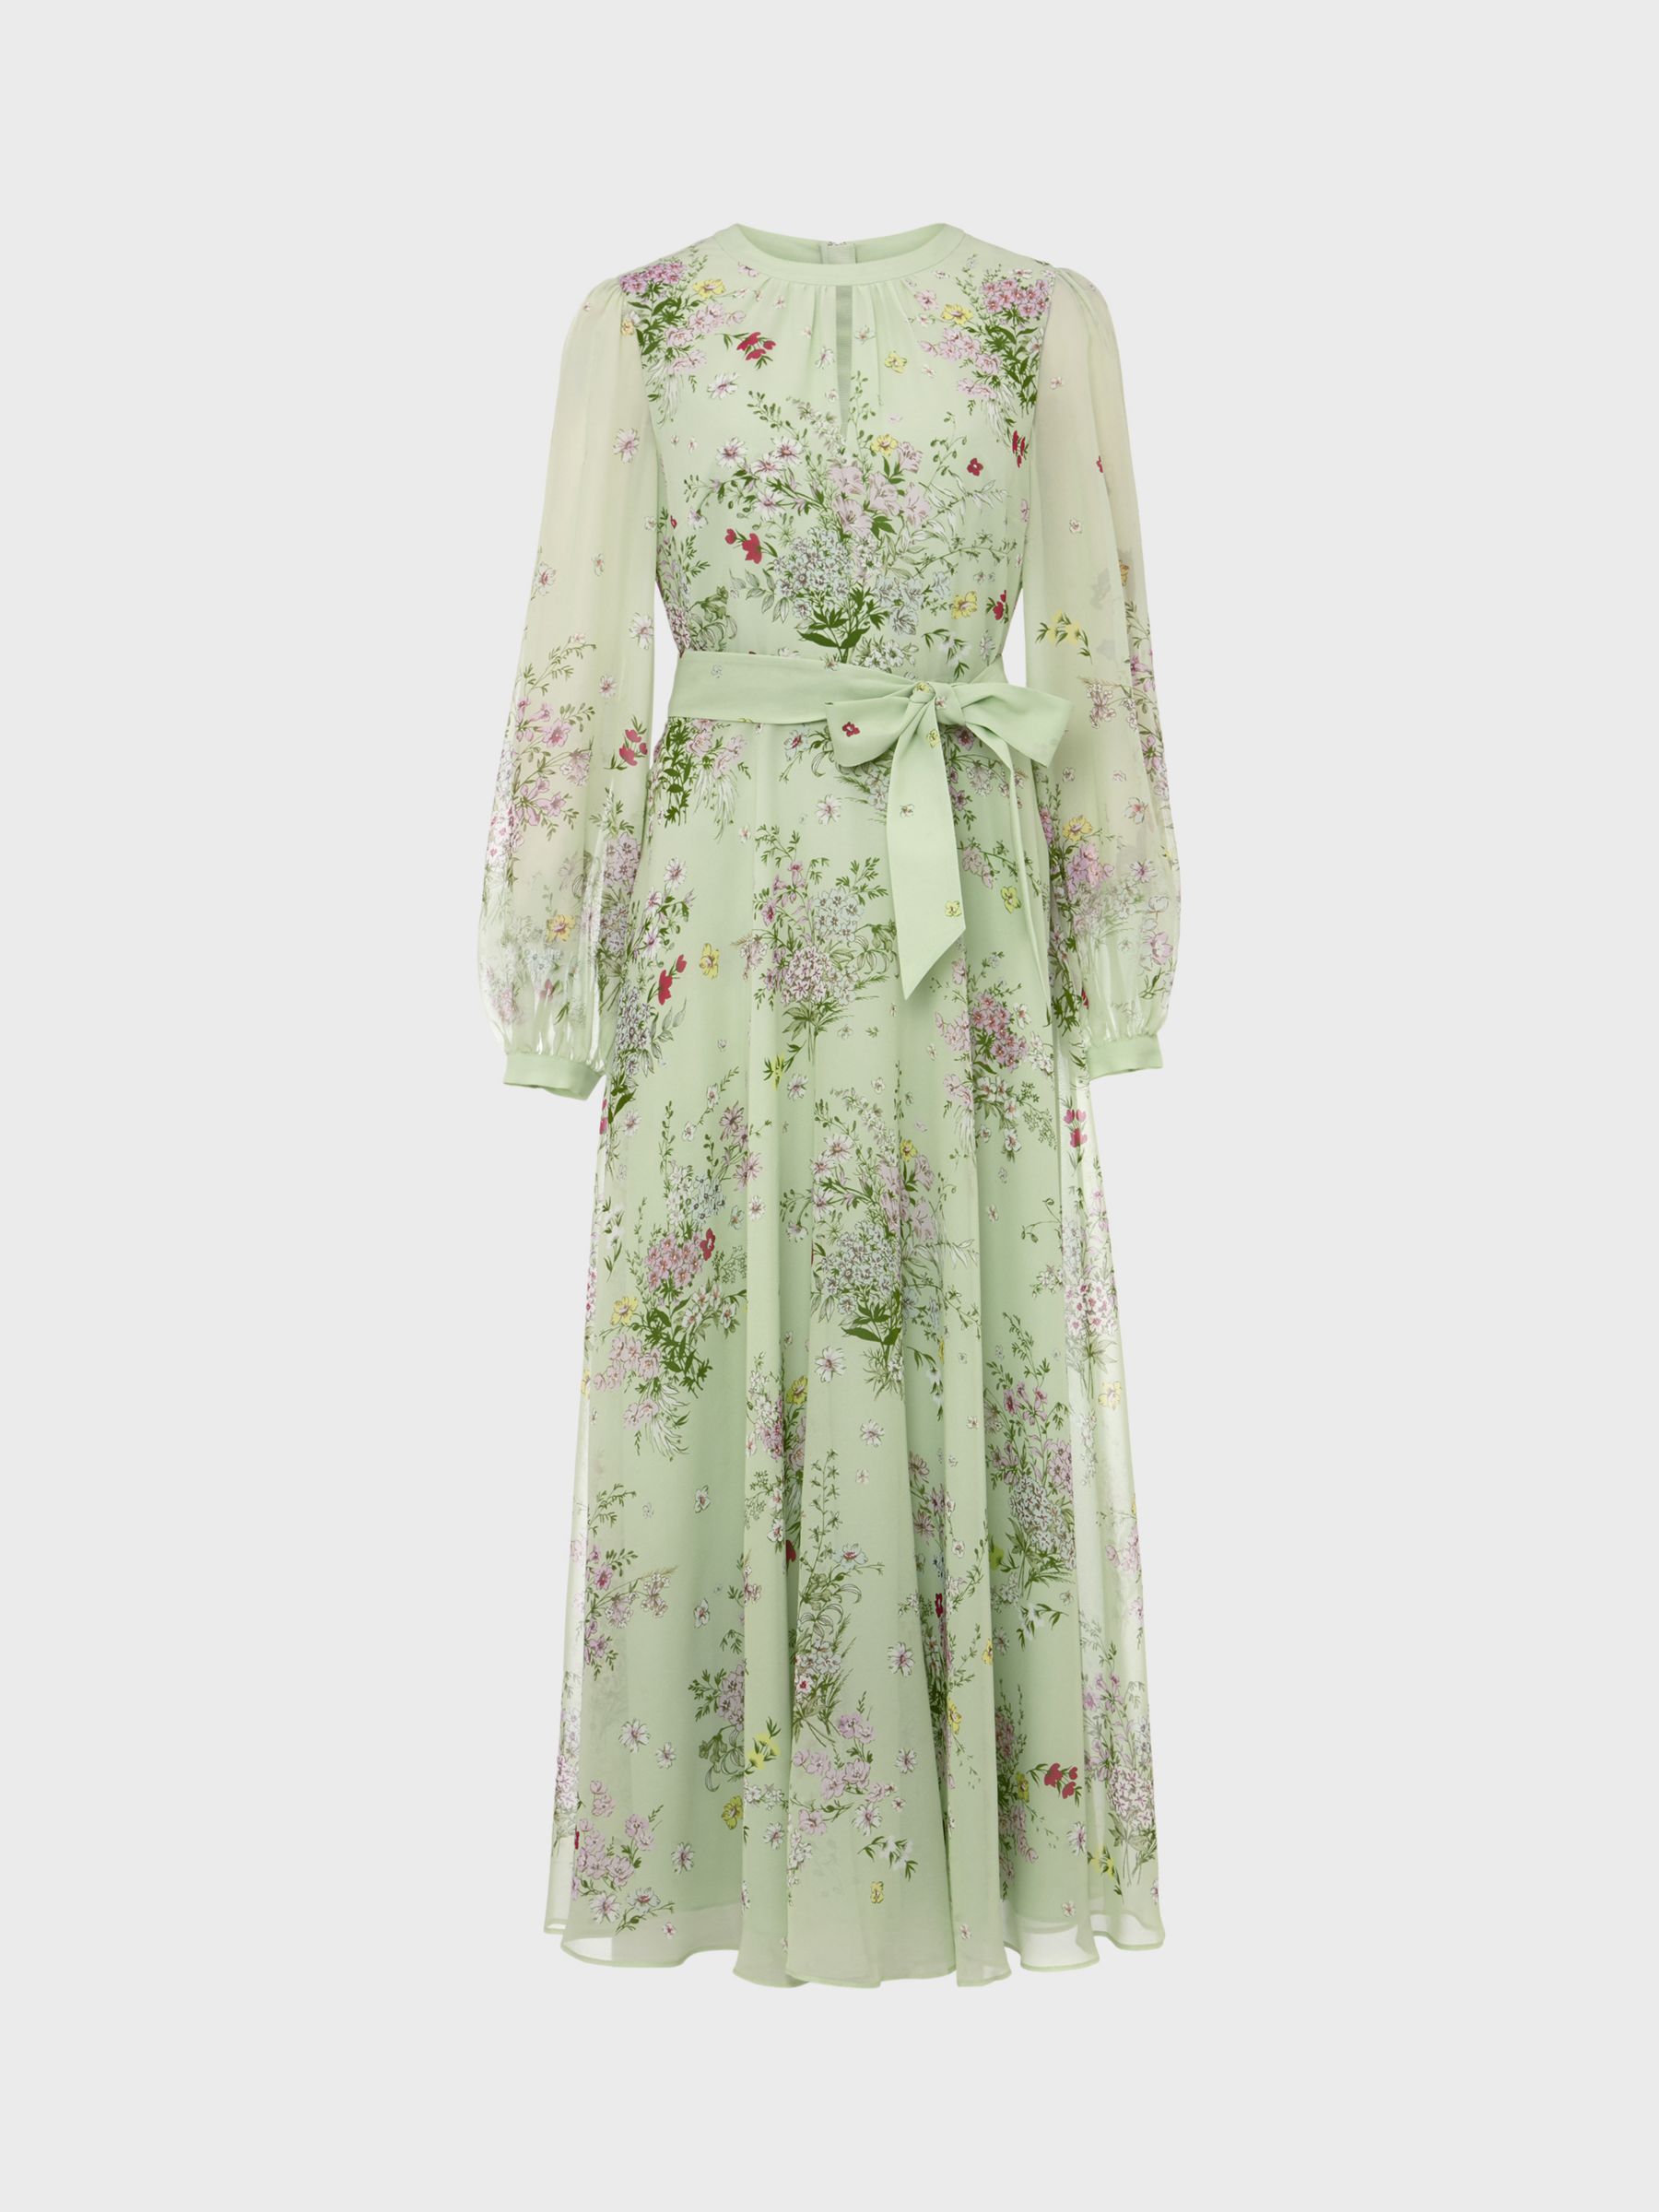 Hobbs Leia Silk Floral Print Dress at John Lewis & Partners